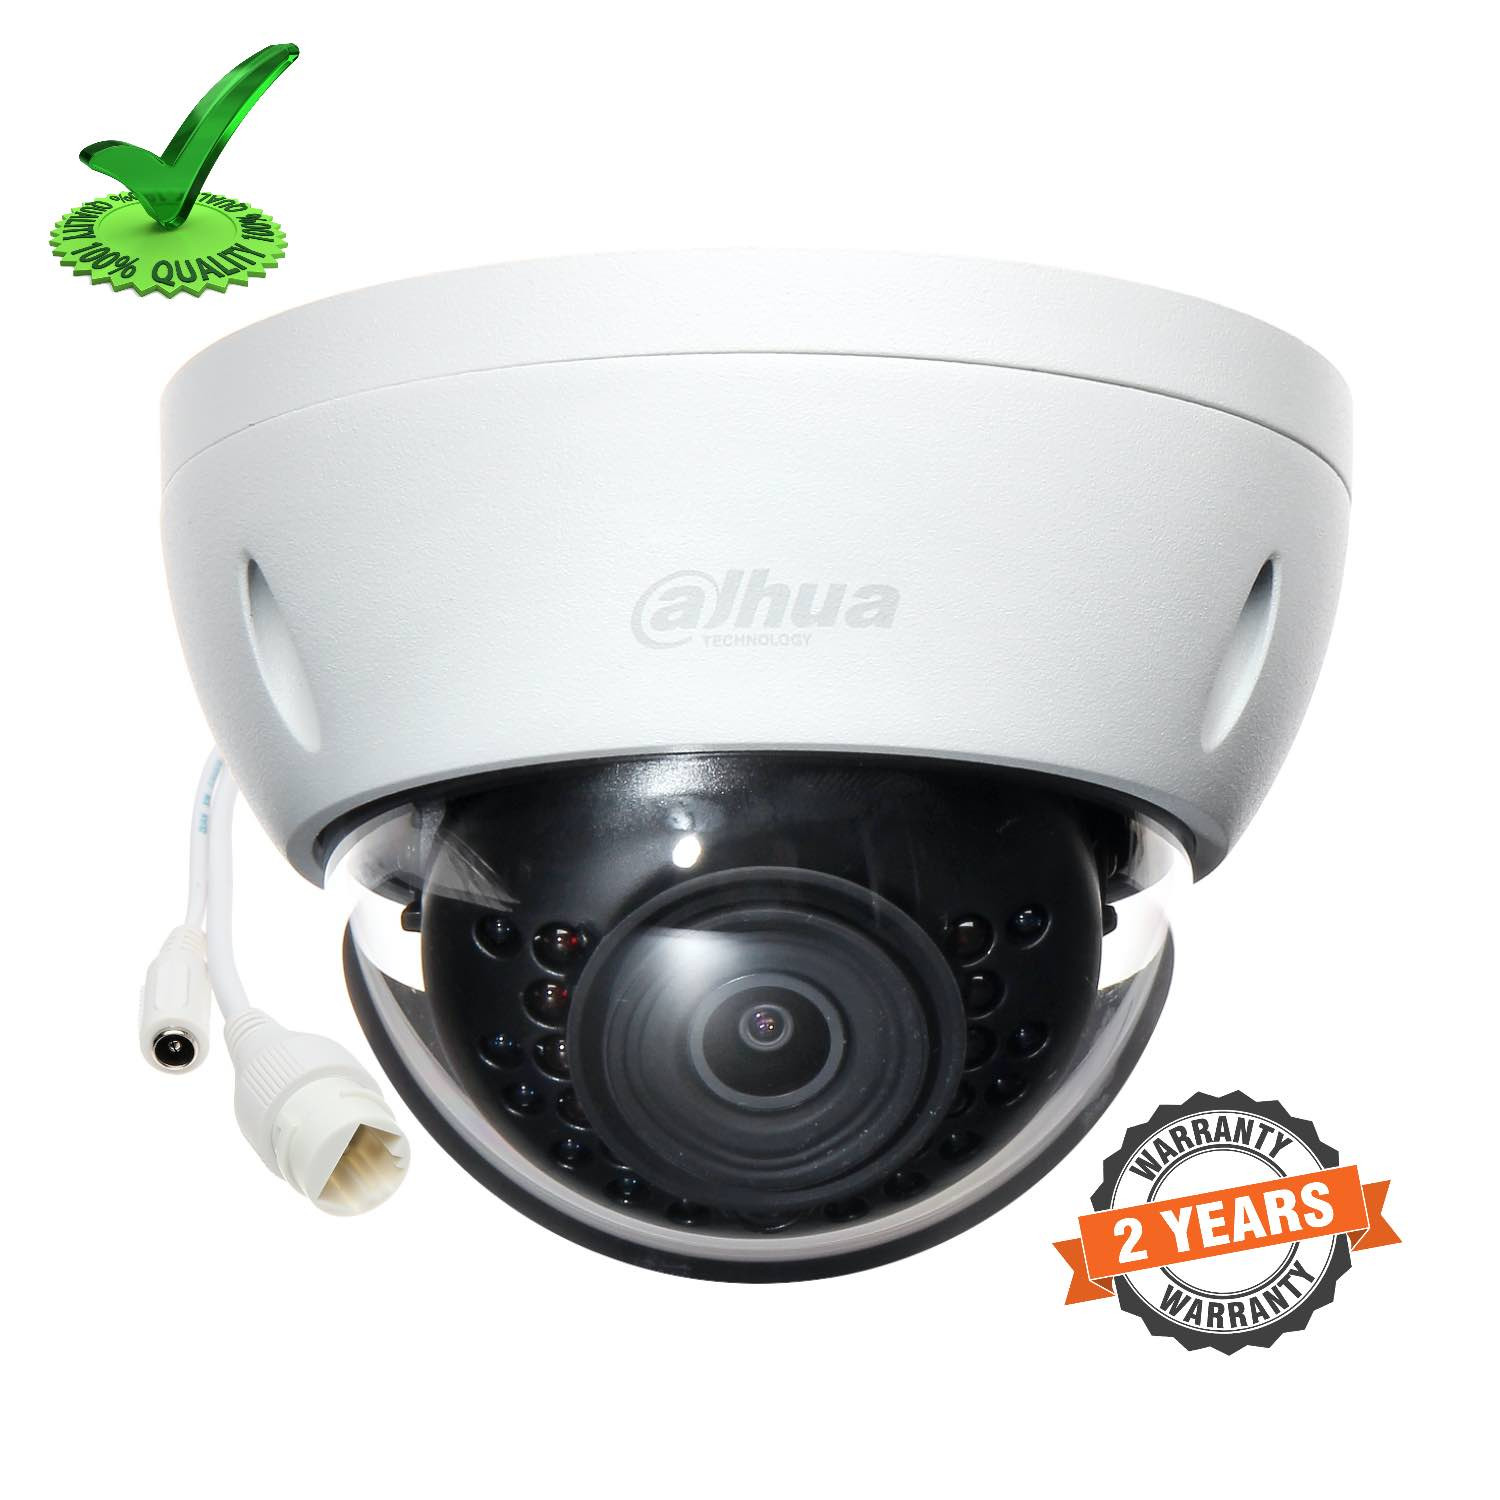 Dahua DH-IPC-HDBW12B0EP-L 2MP IR CCTV Dome Network Camera